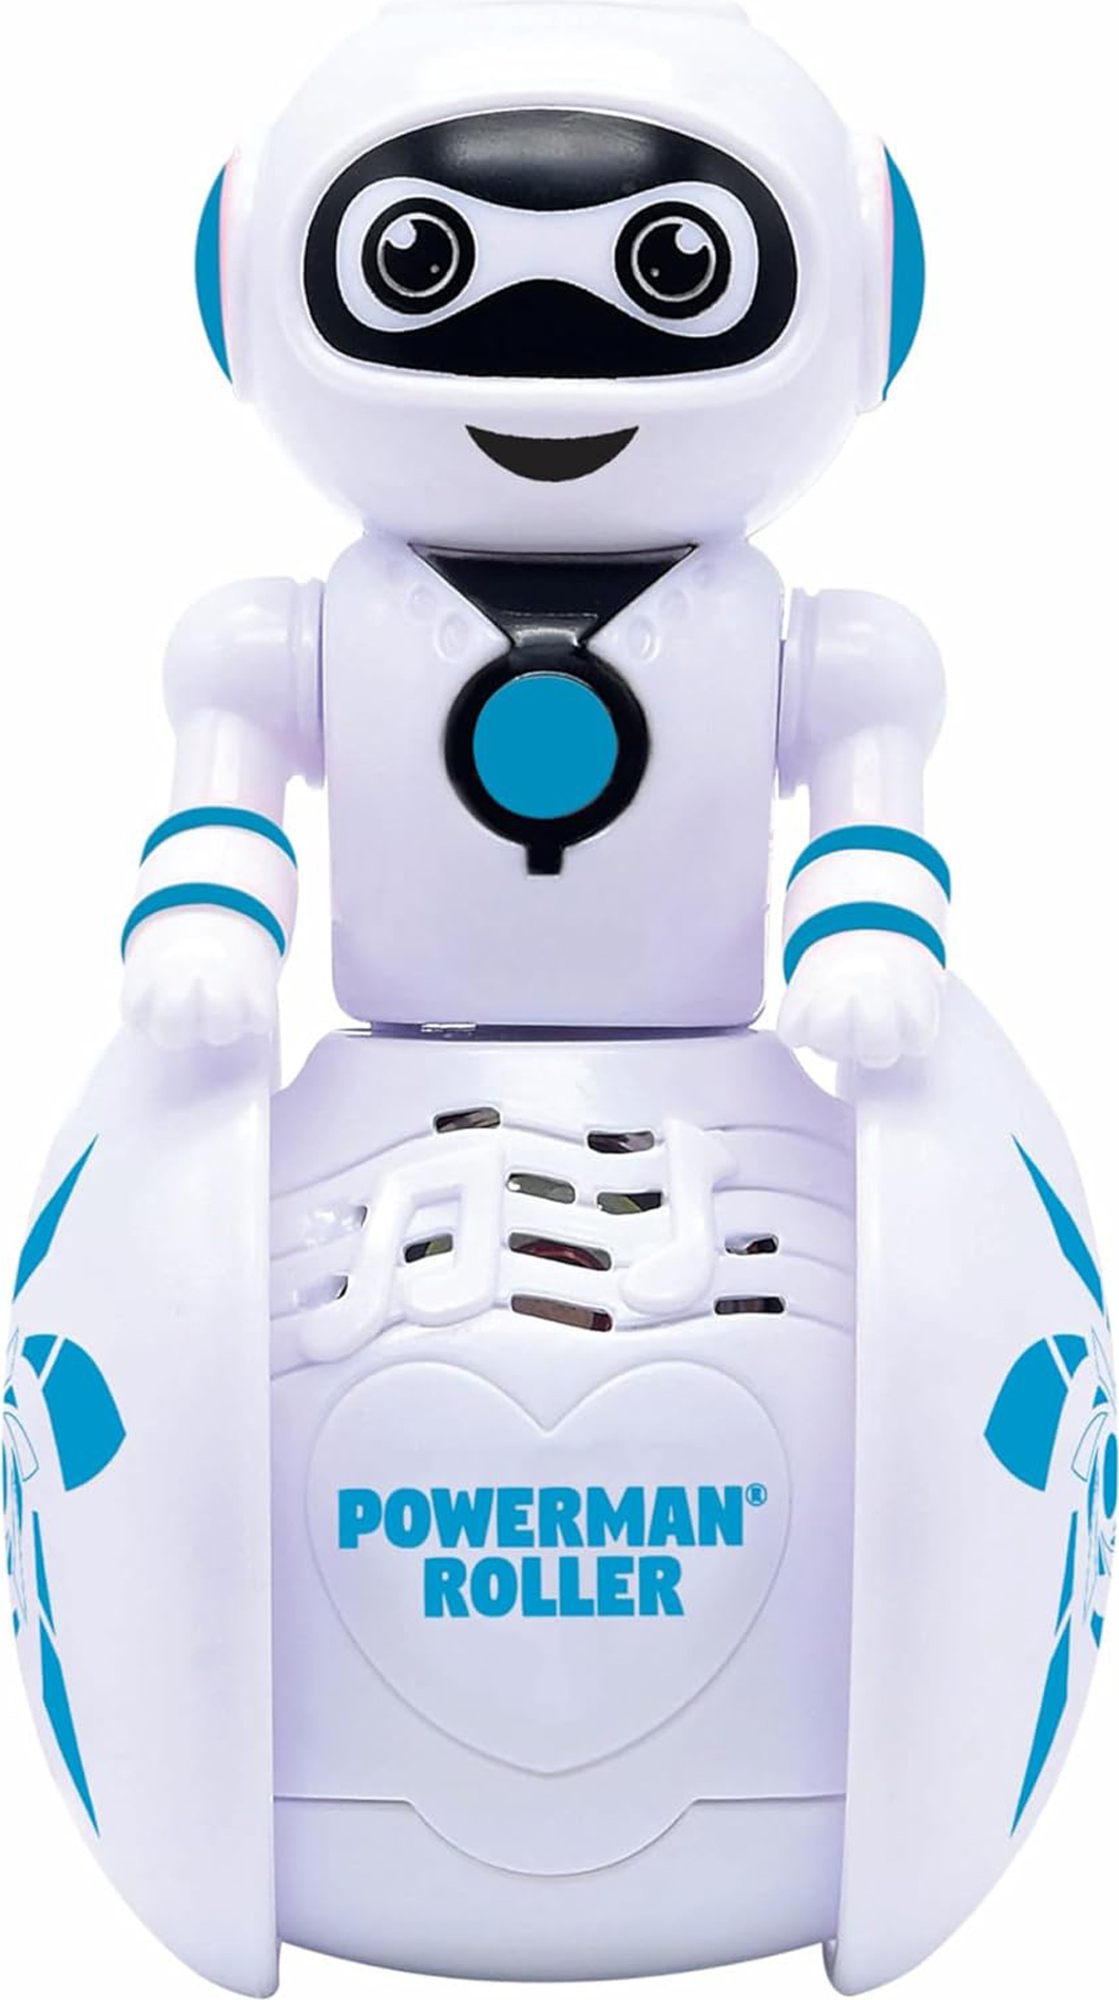 Jednokolový robot Powerman Roller